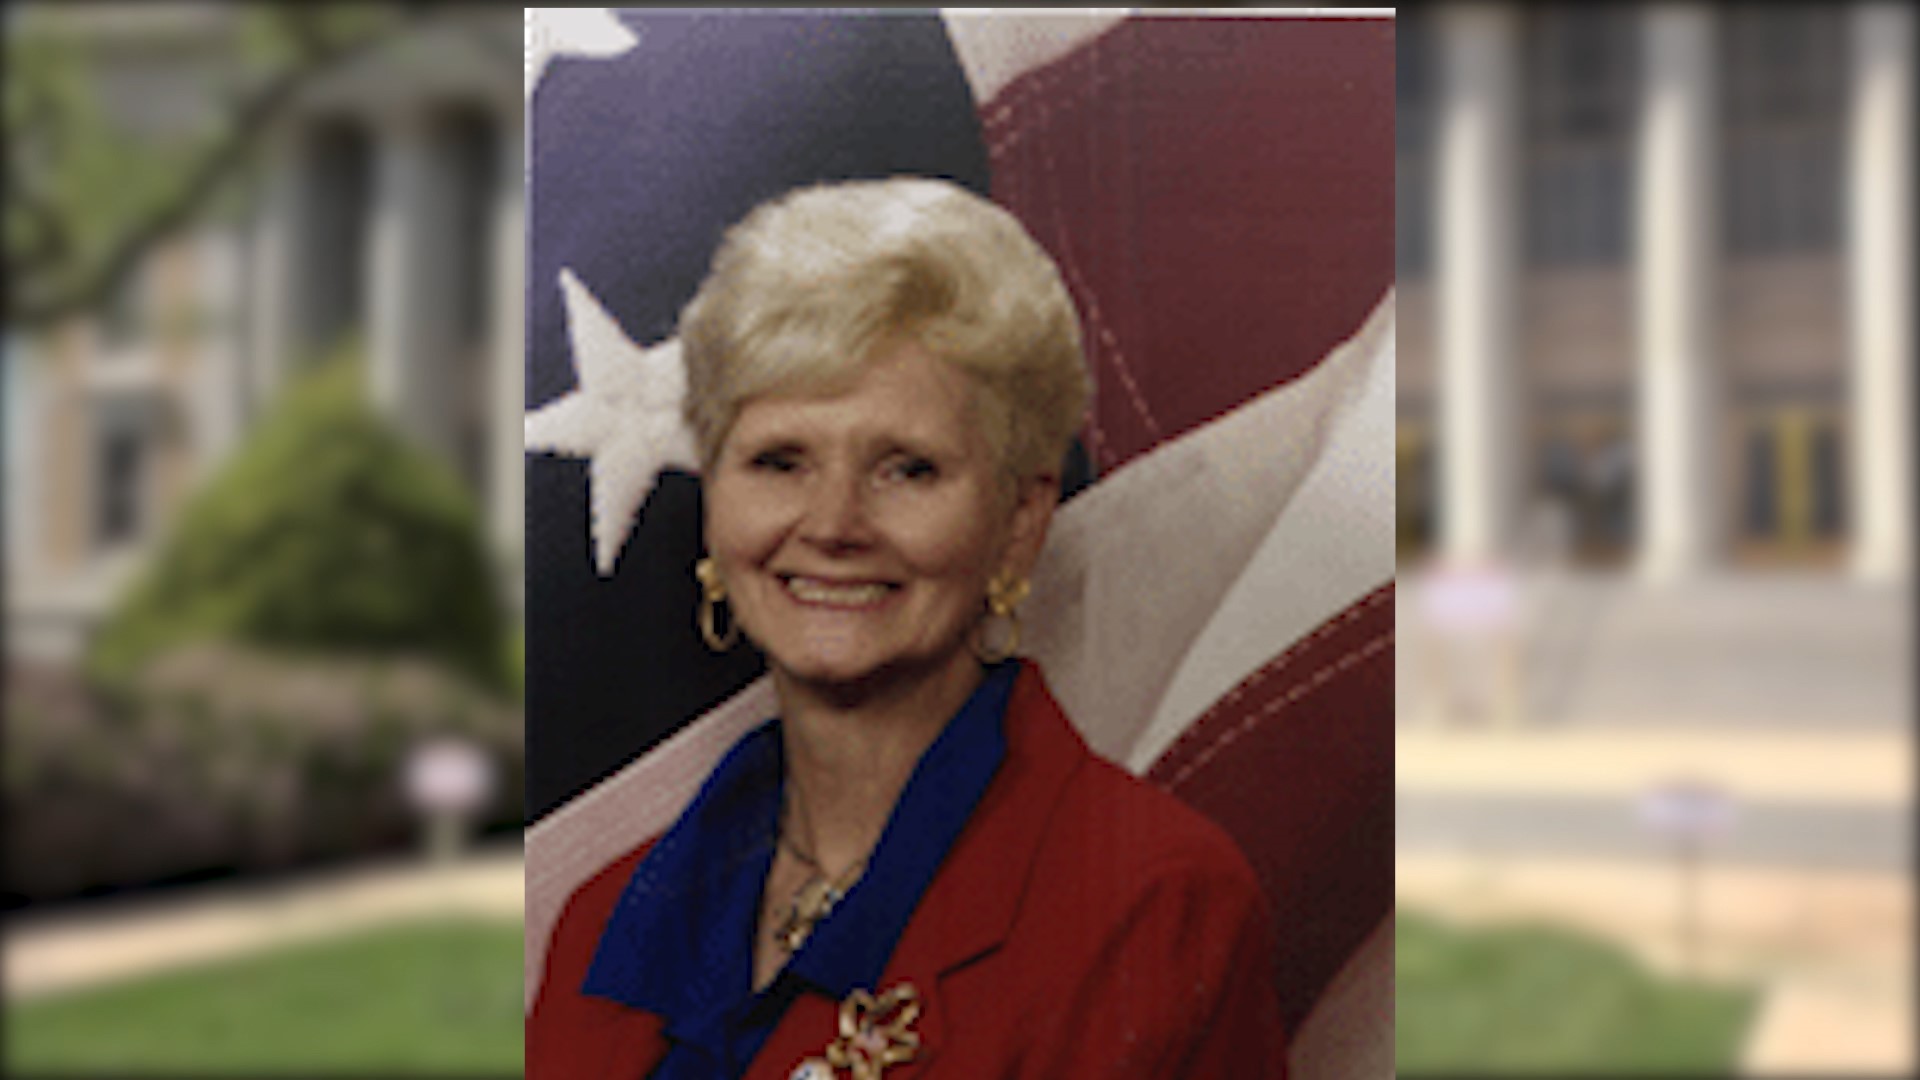 Liz McGill began serving as the county clerk in 2001.